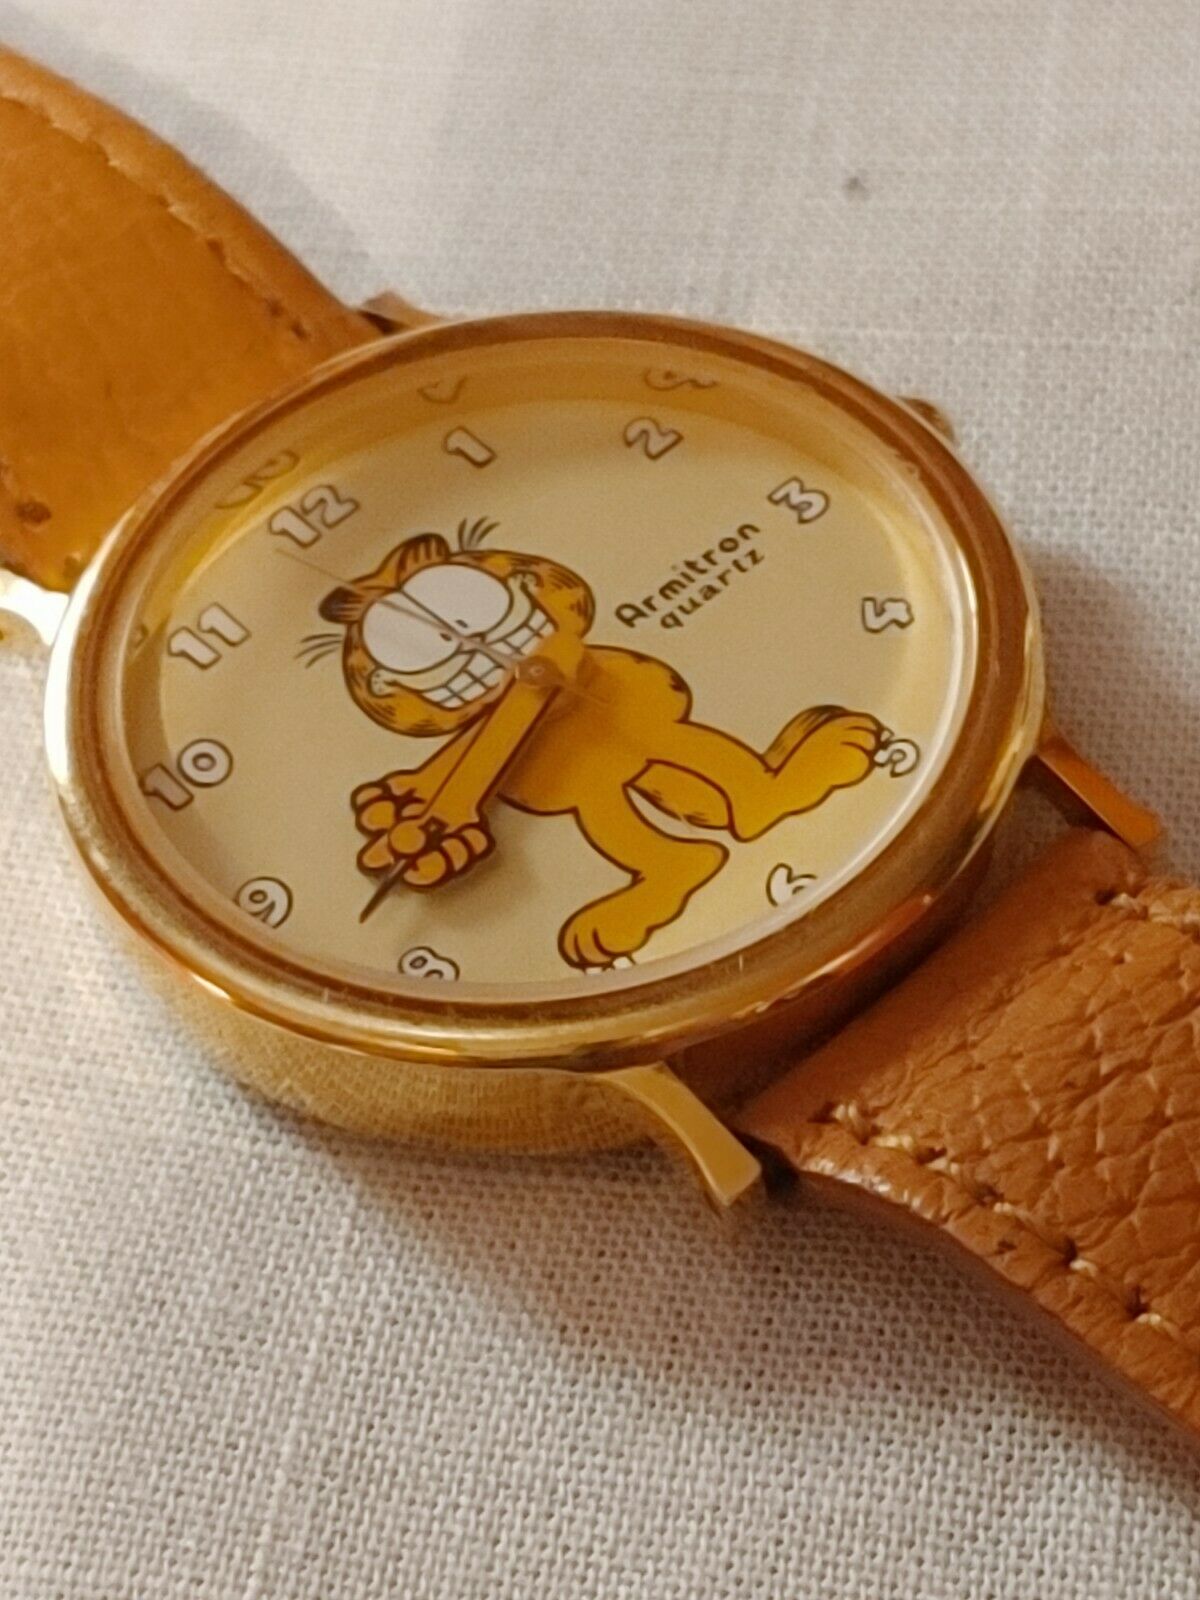 Vintage 1978 Garfield Cat Watch by Armitron Water Resistant